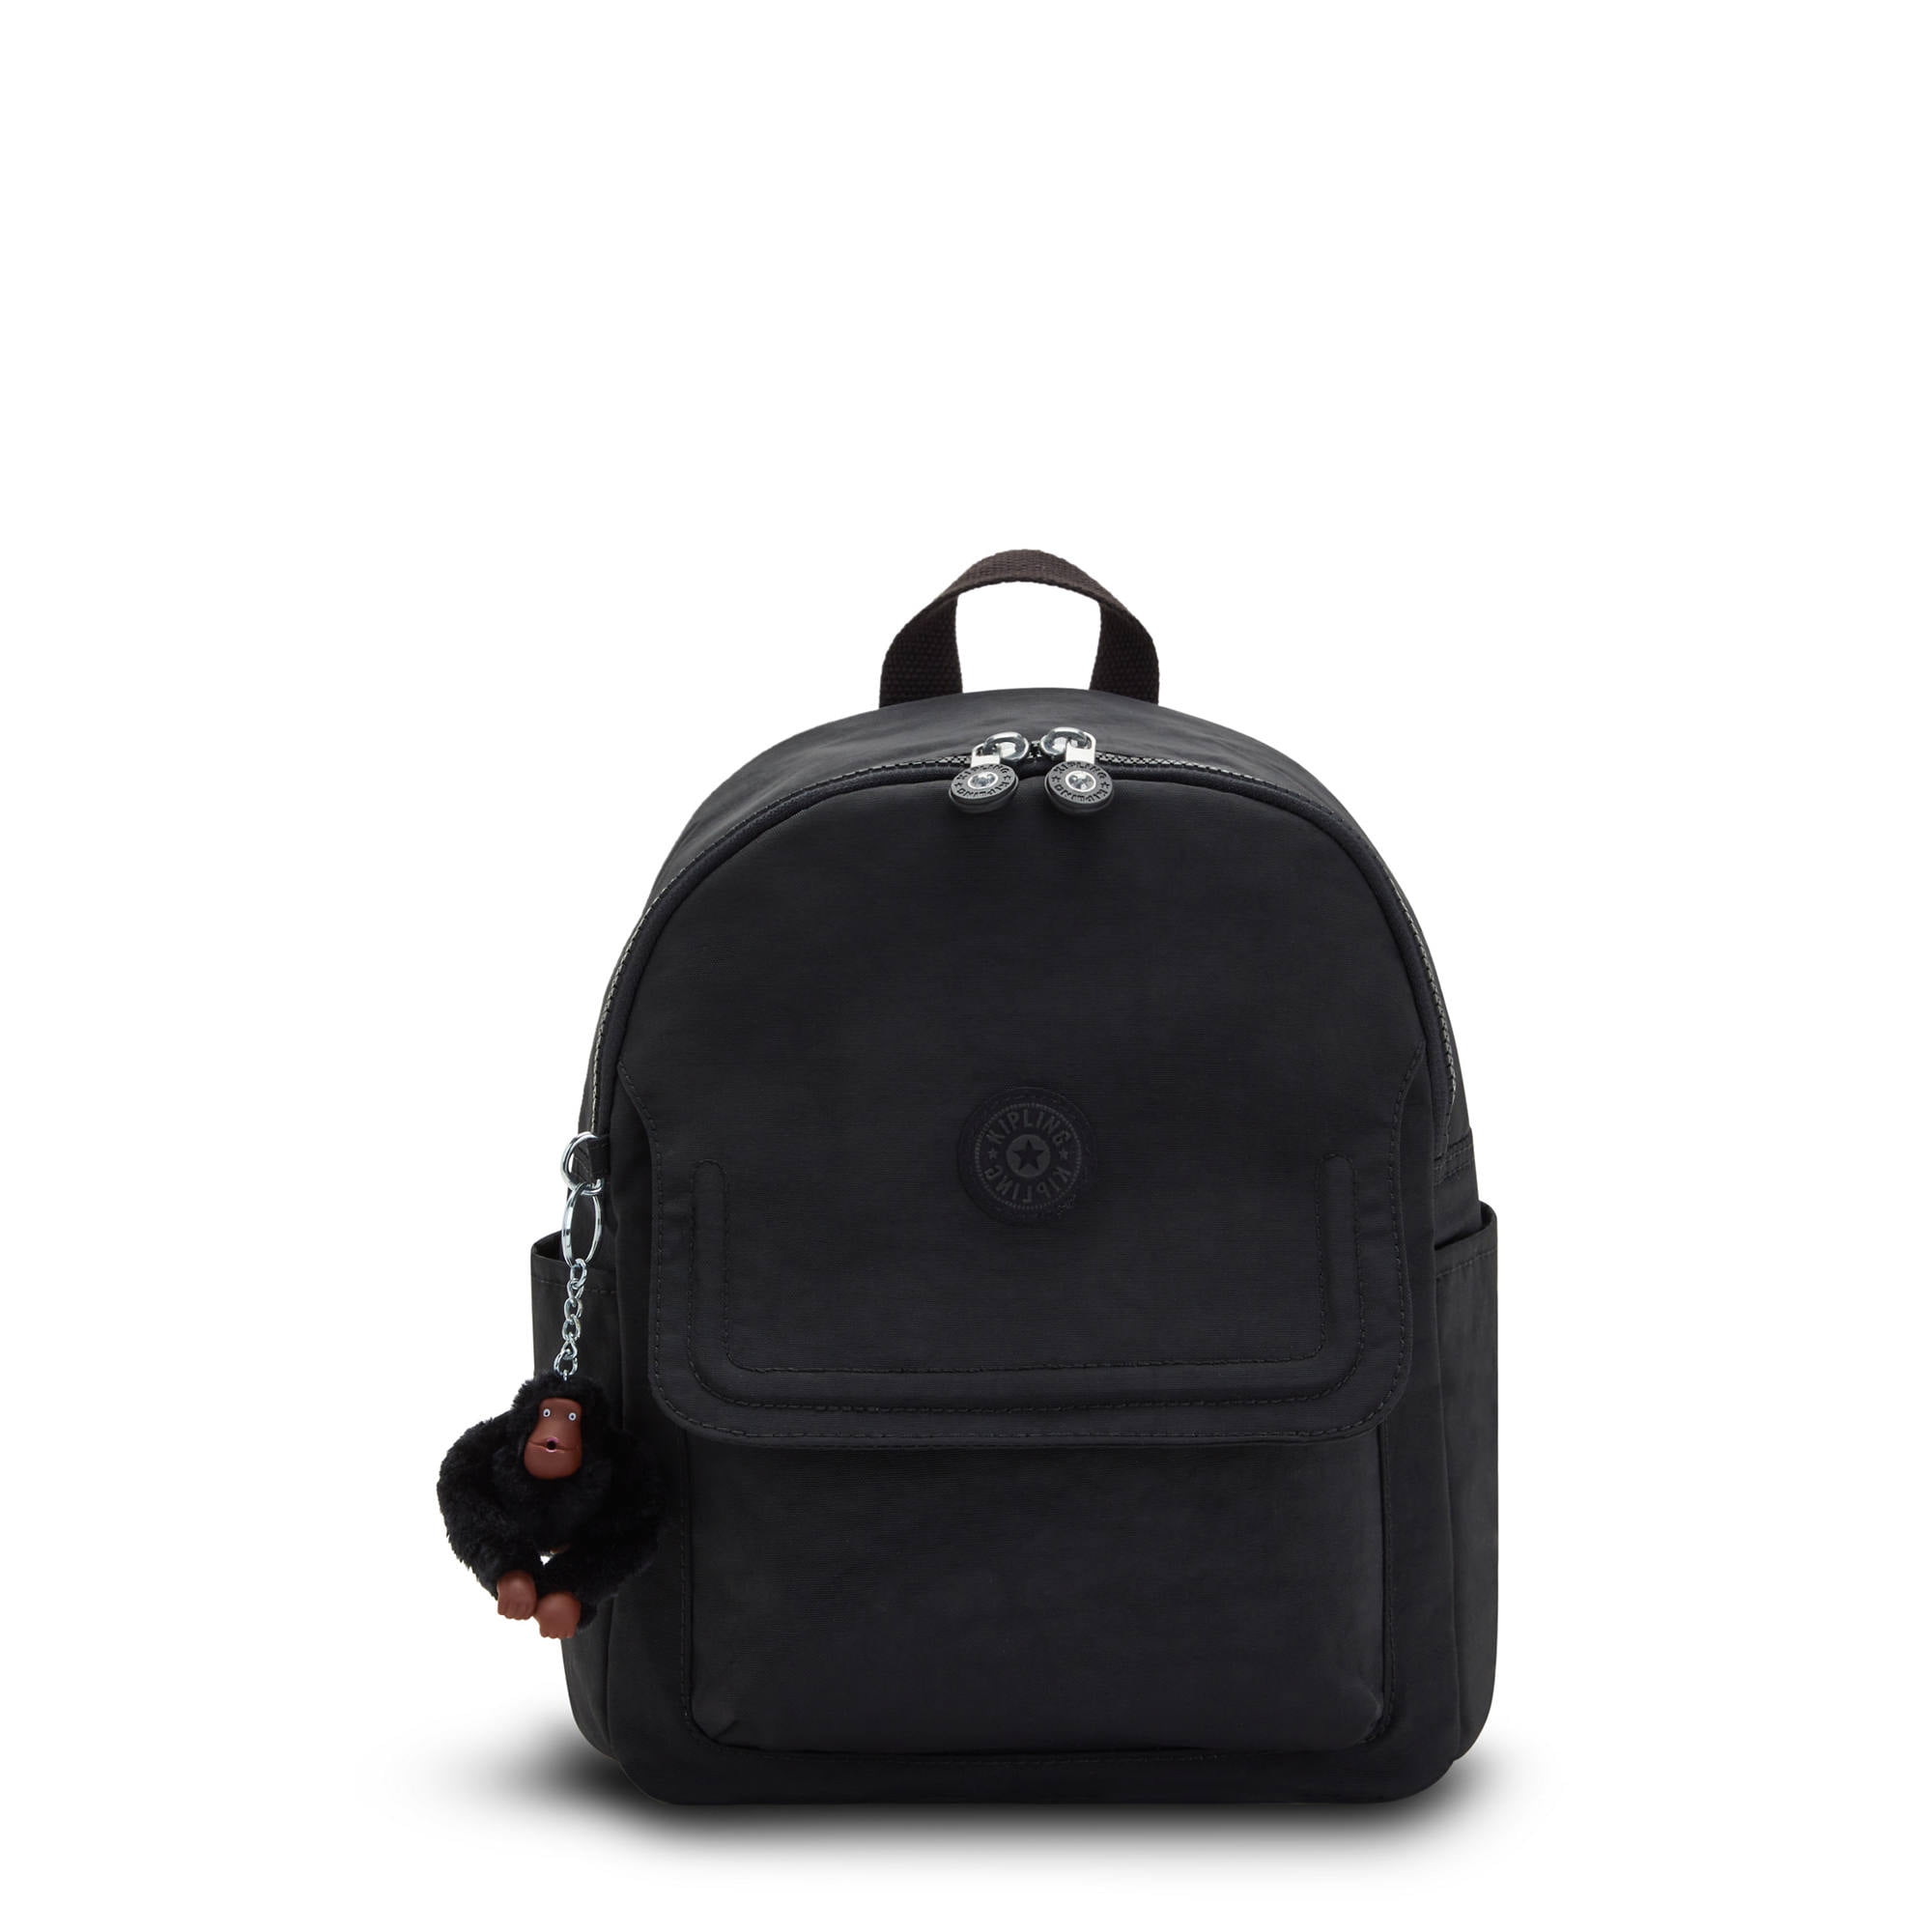 David Jones PU Leather Backpack for Women Solid Color Travel School Bag  Fashion Female Multi-Function Handbags Wear-resistant